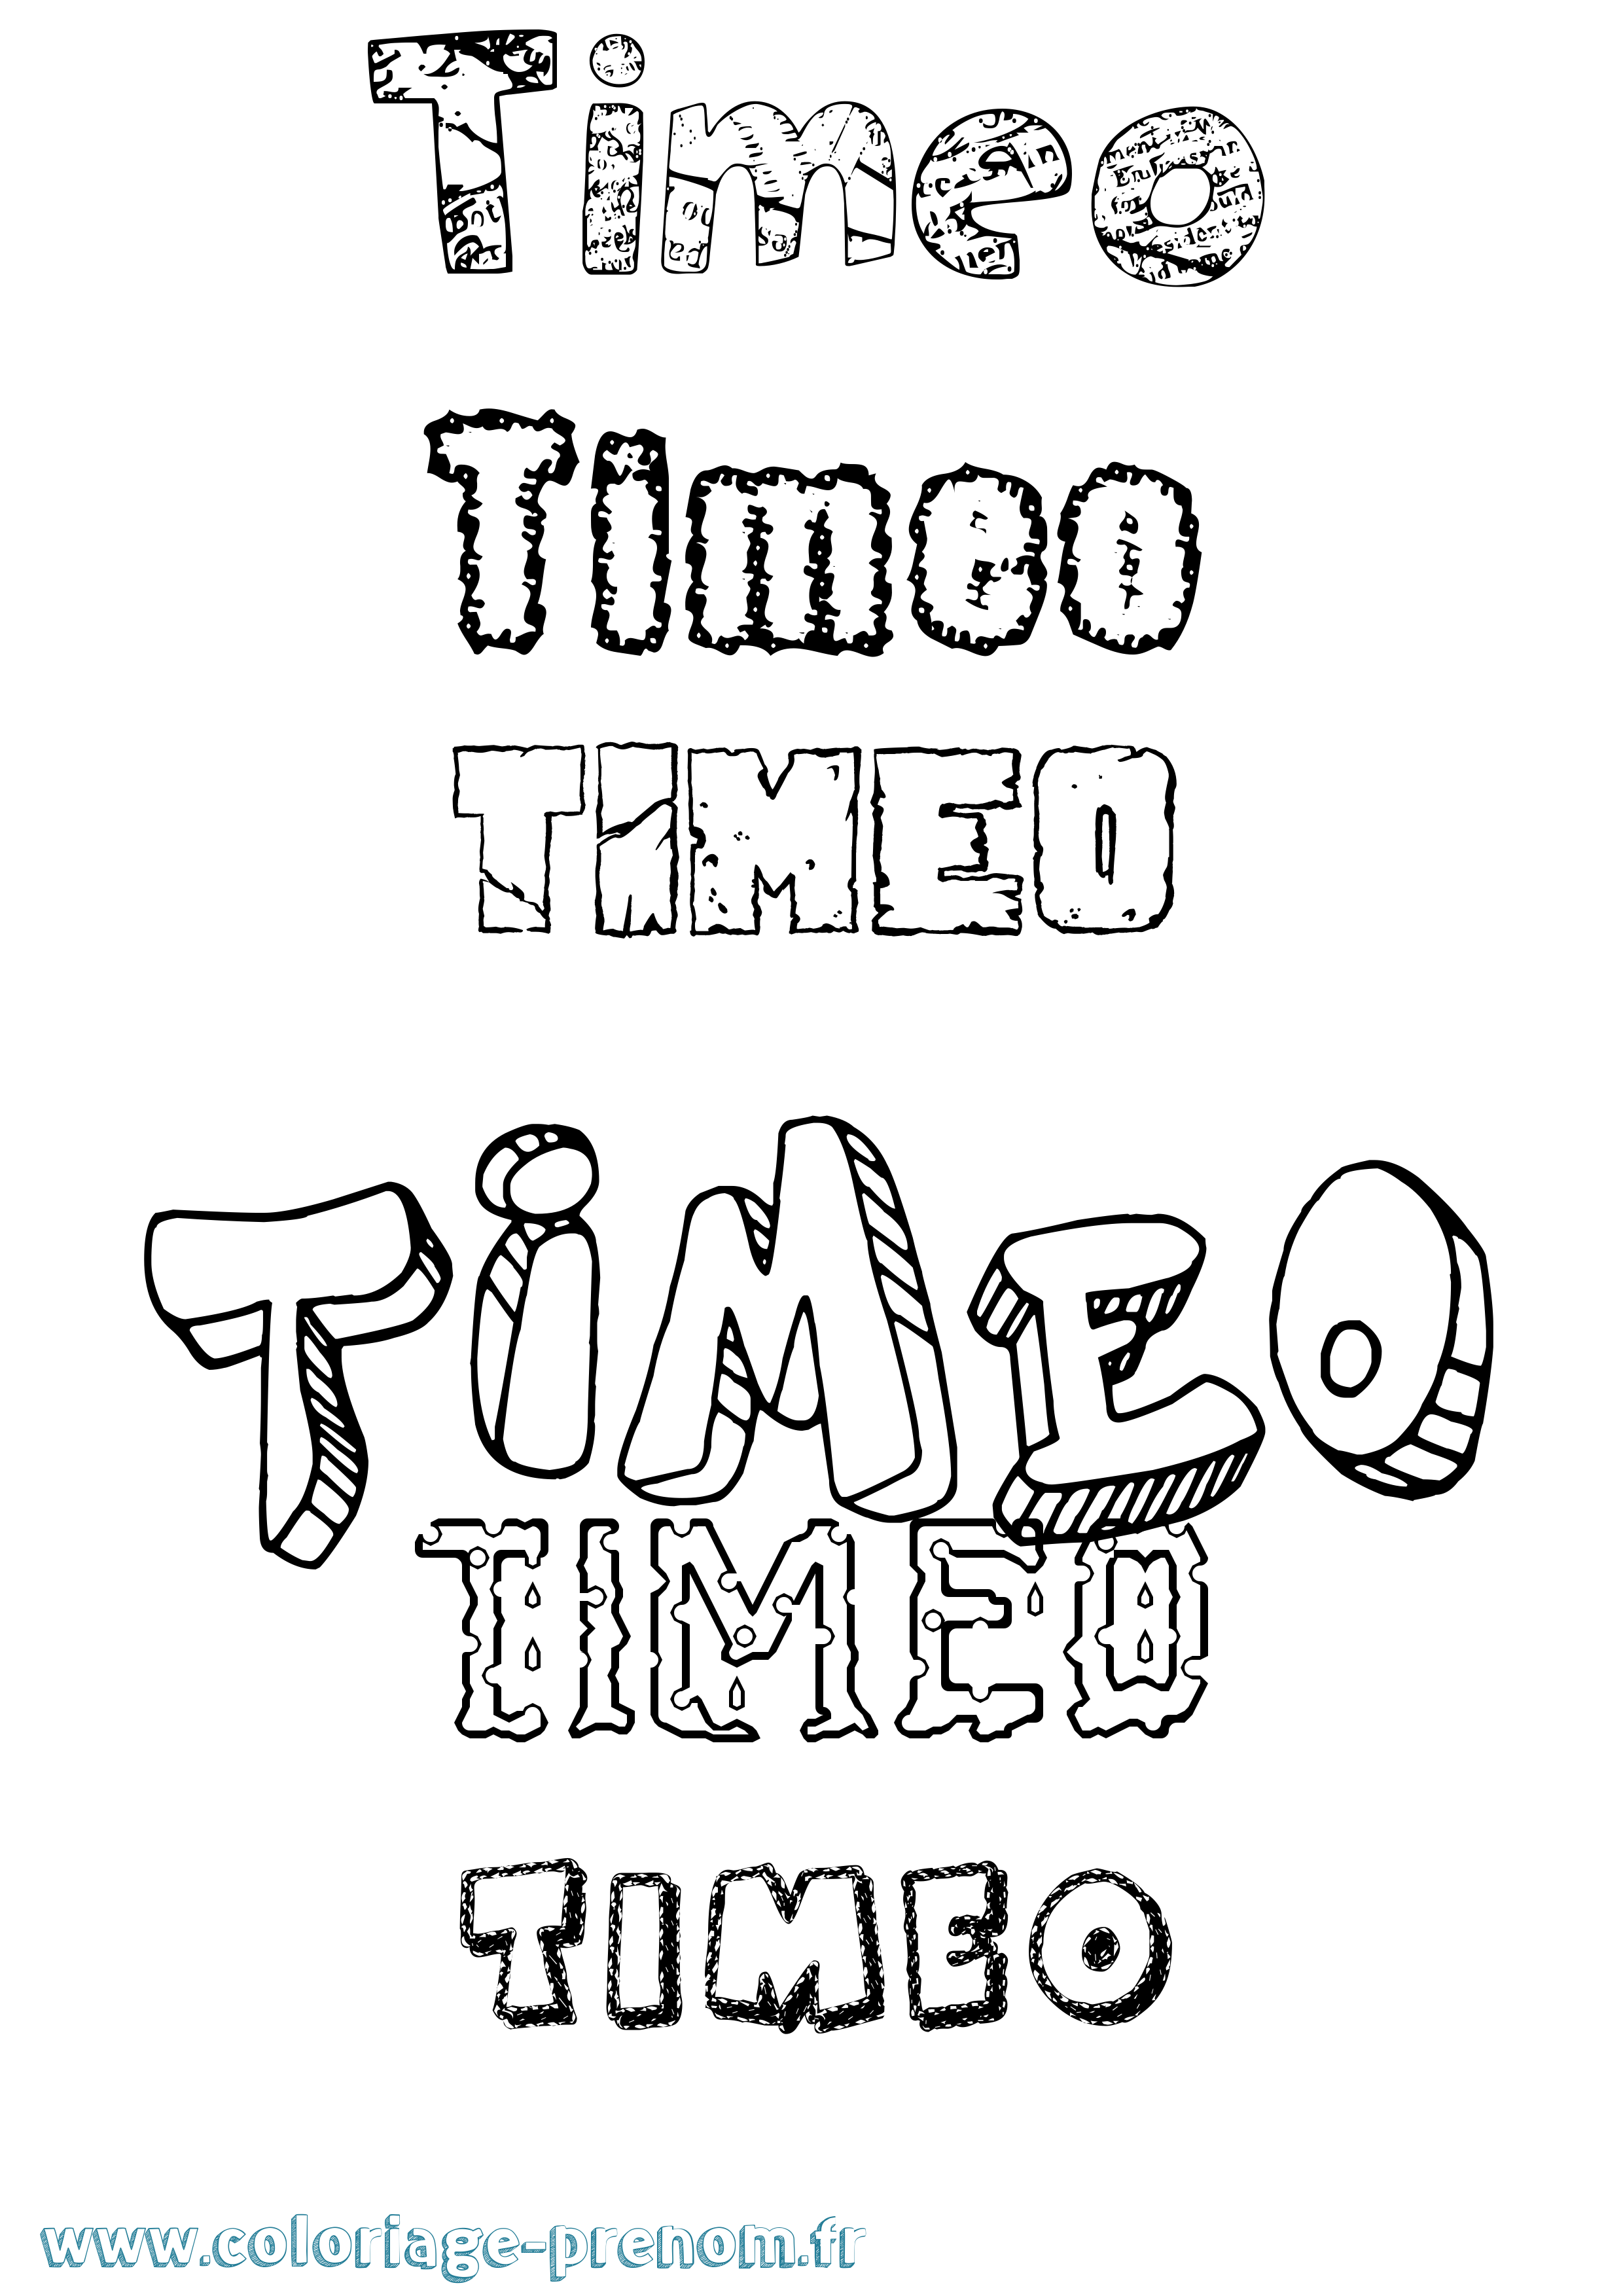 Coloriage prénom Timeo